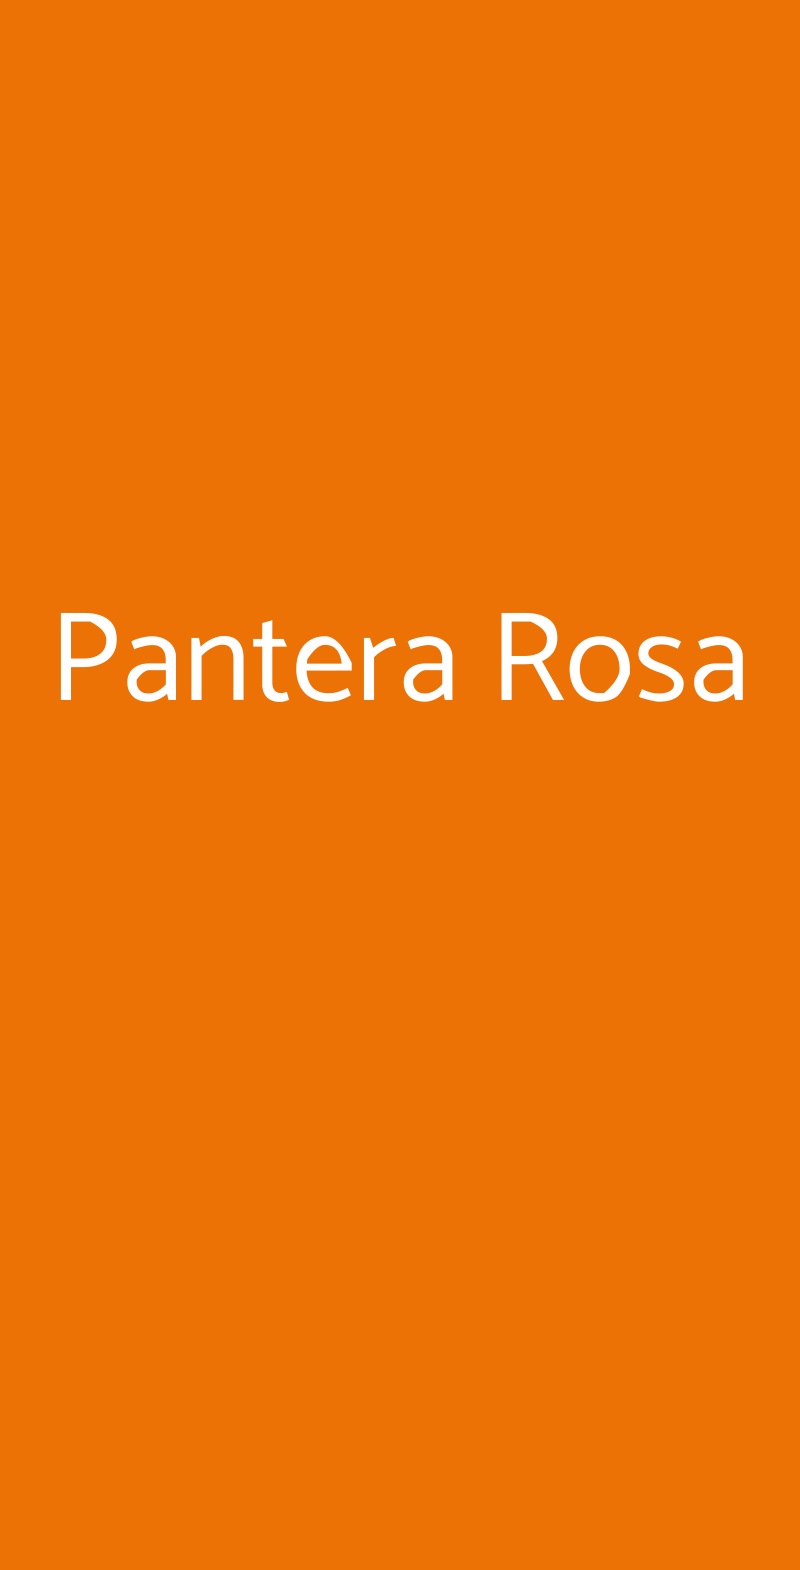 Pantera Rosa Bologna menù 1 pagina